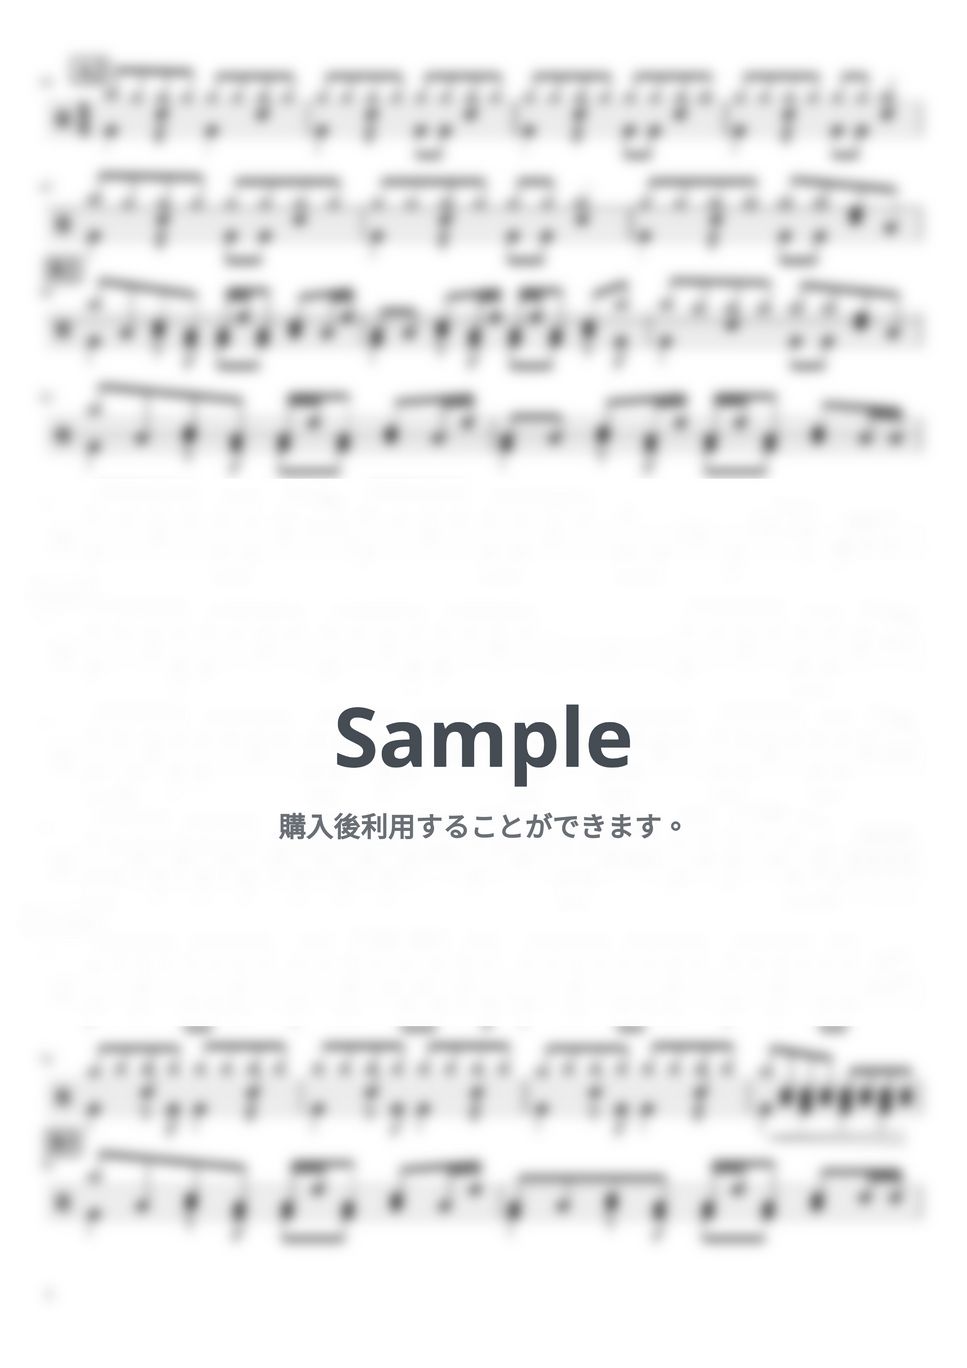 B'z - 命名 (ドラム譜面) by cabal